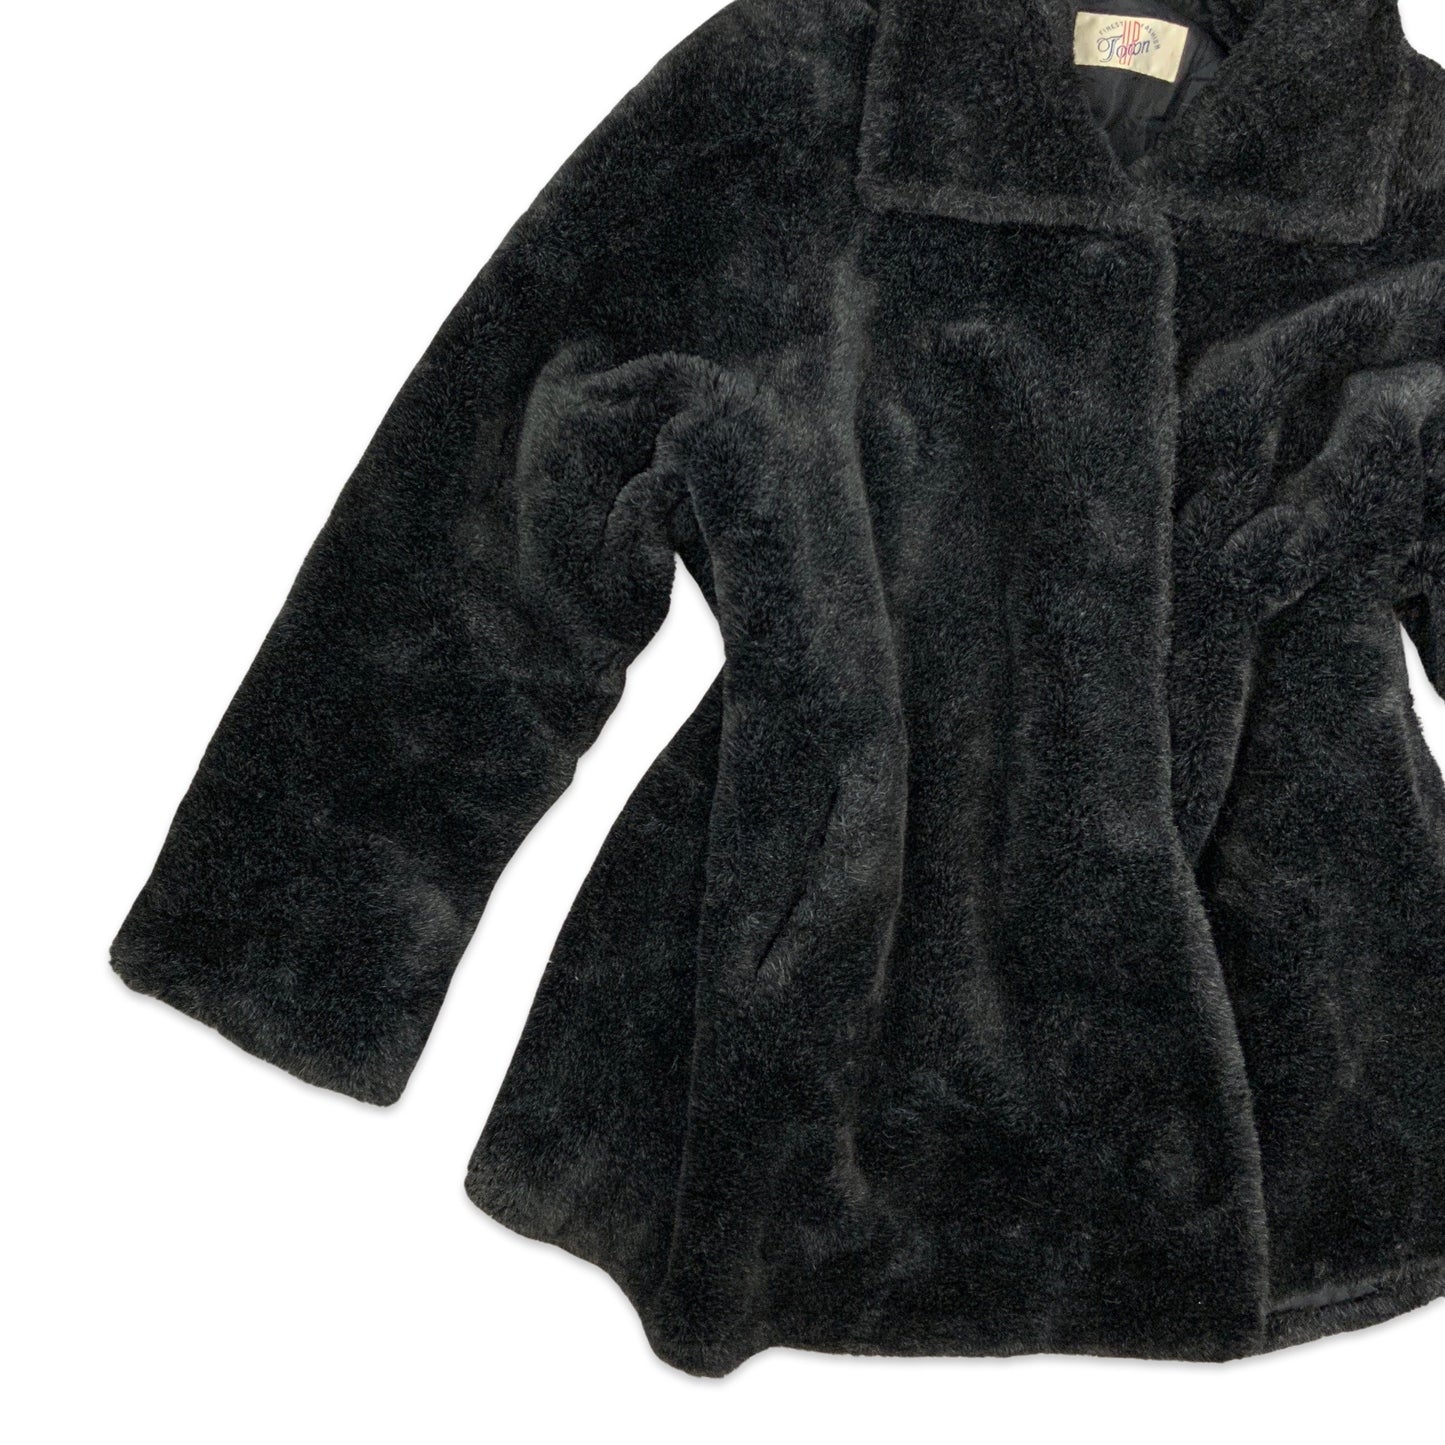 Vintage 90s Y2K Black Faux Fur Teddy Bear Coat 14 16 18